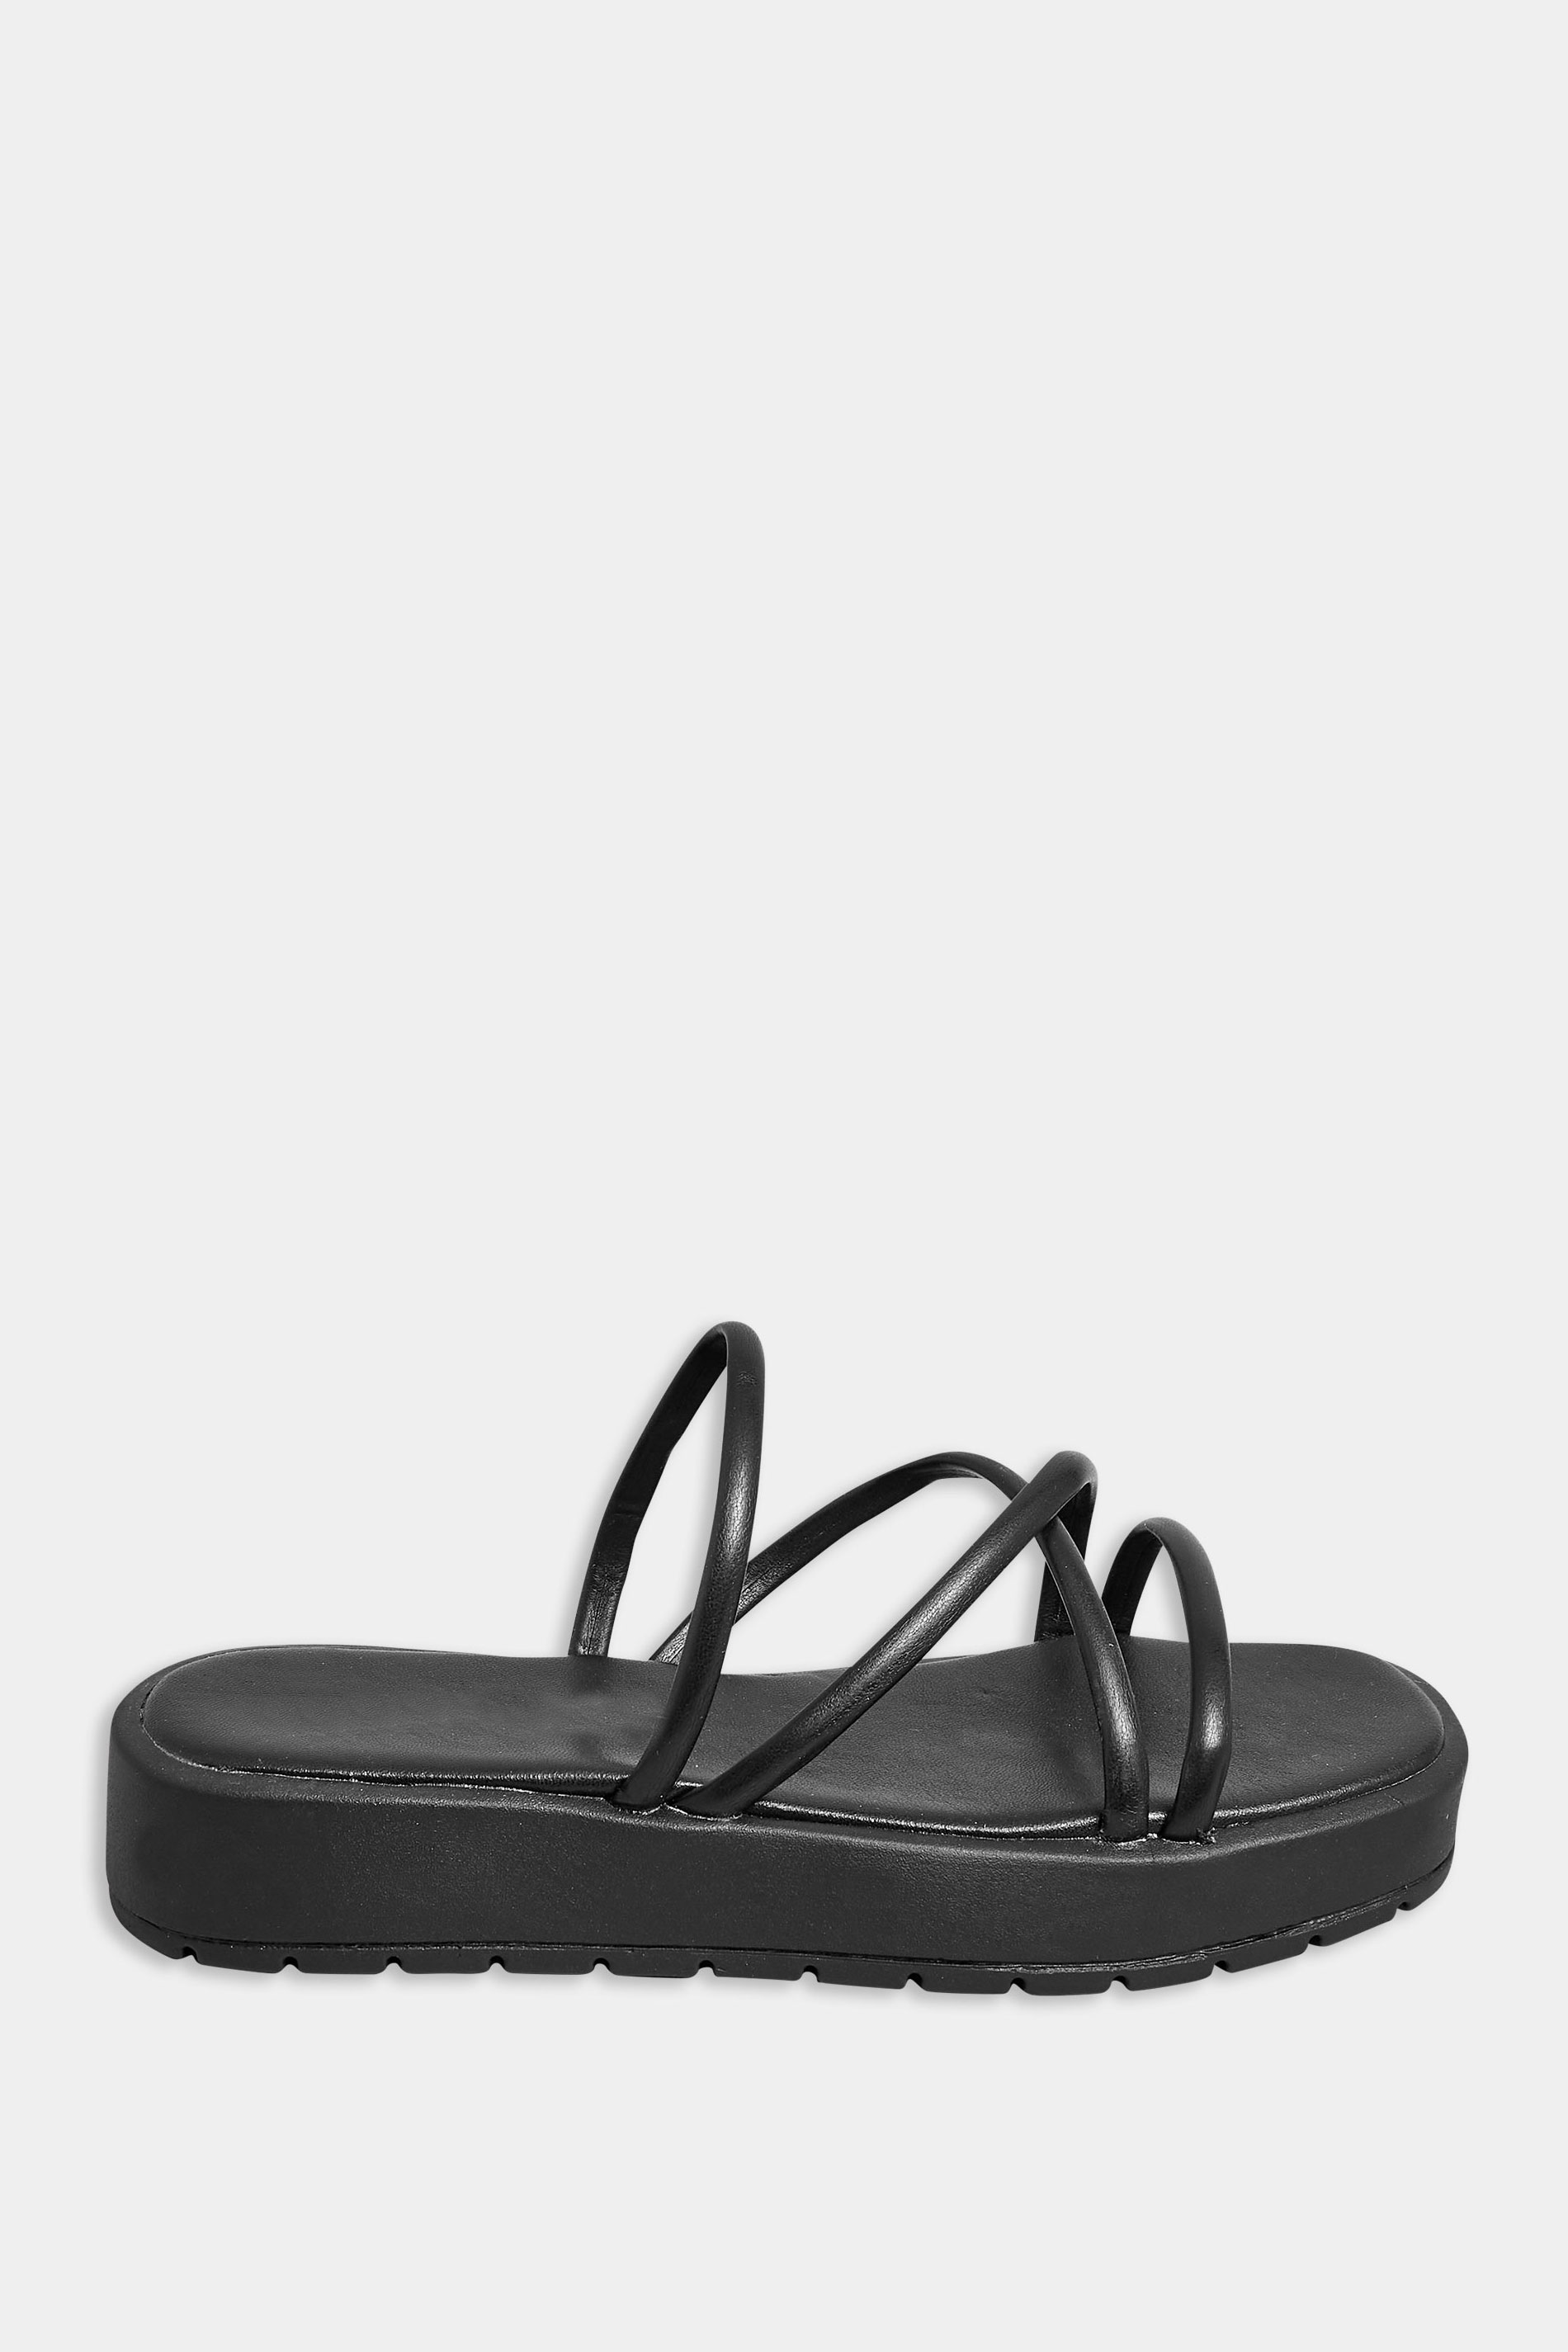 PixieGirl Black Strappy Flatform Sandals In Standard Fit | PixieGirl 3